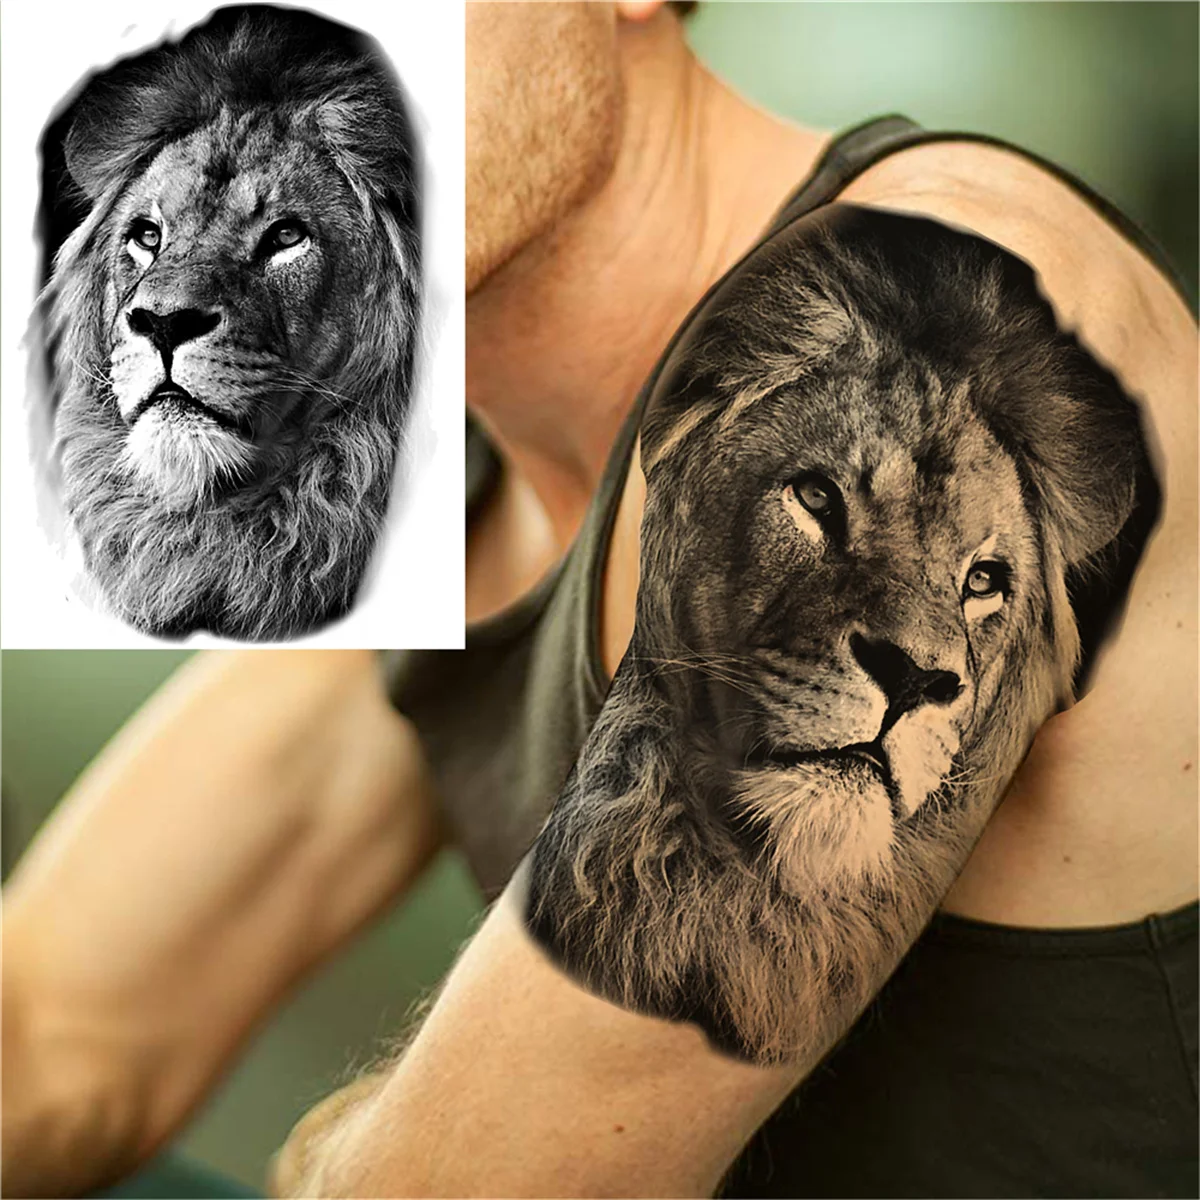 Knight Warrior Temporary Tattoos For Men Women Adult Tiger Fake Wolf Tattoo Sticker Black Astronaut Body Art Painting Tatoos